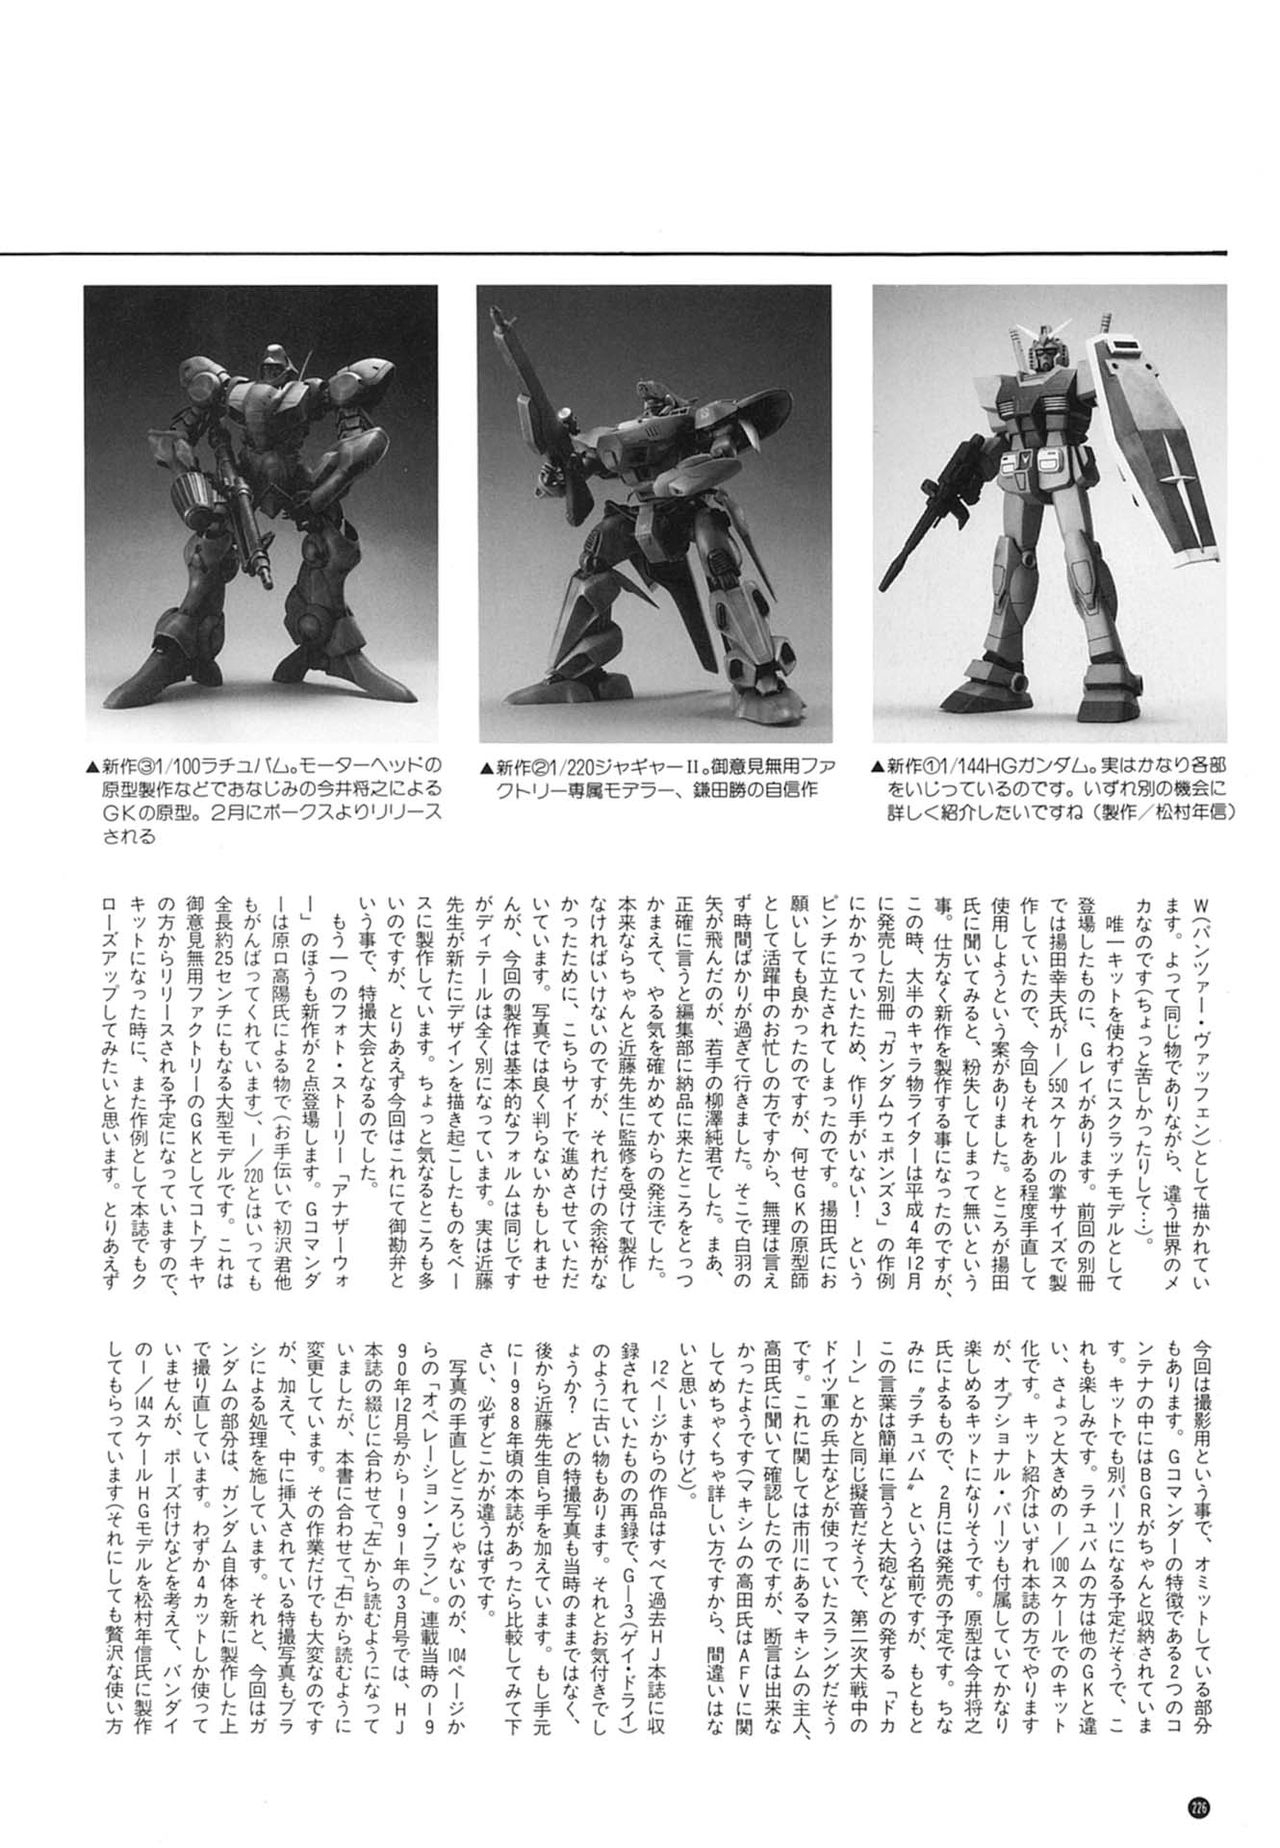 [Kazuhisa Kondo] Kazuhisa Kondo 2D & 3D Works - Go Ahead - From Mobile Suit Gundam to Original Mechanism 225